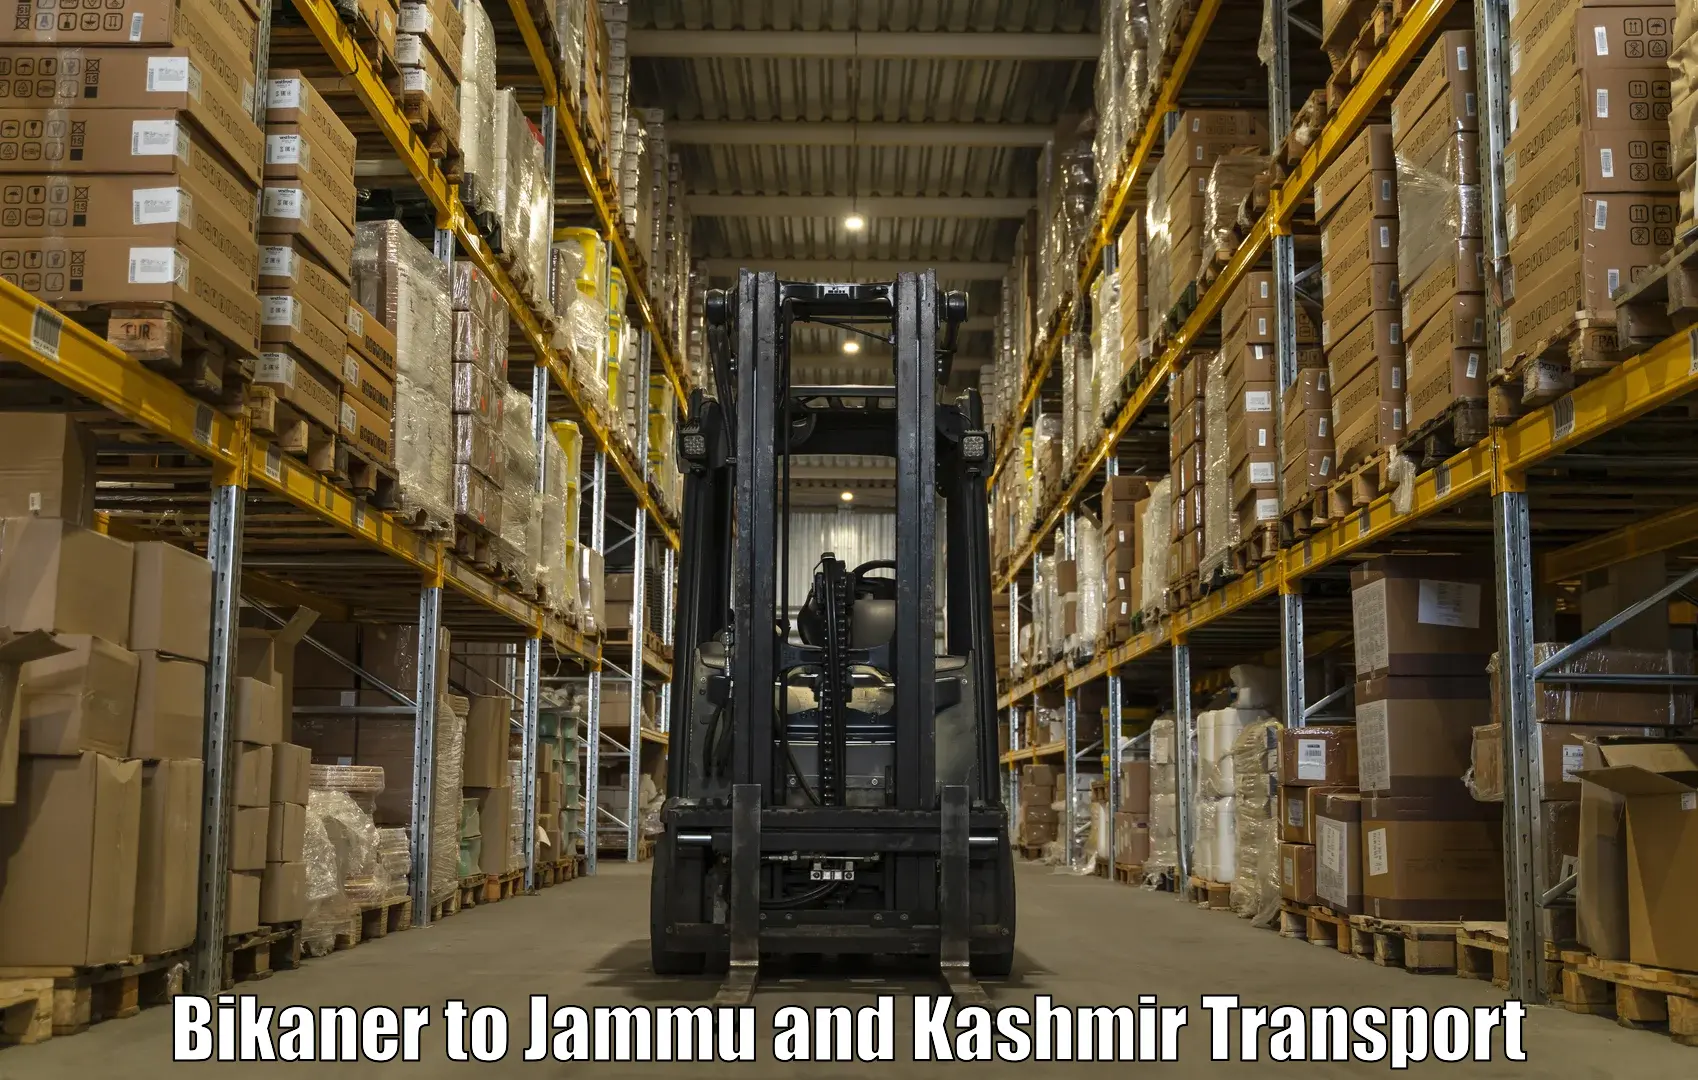 Delivery service Bikaner to Jammu and Kashmir